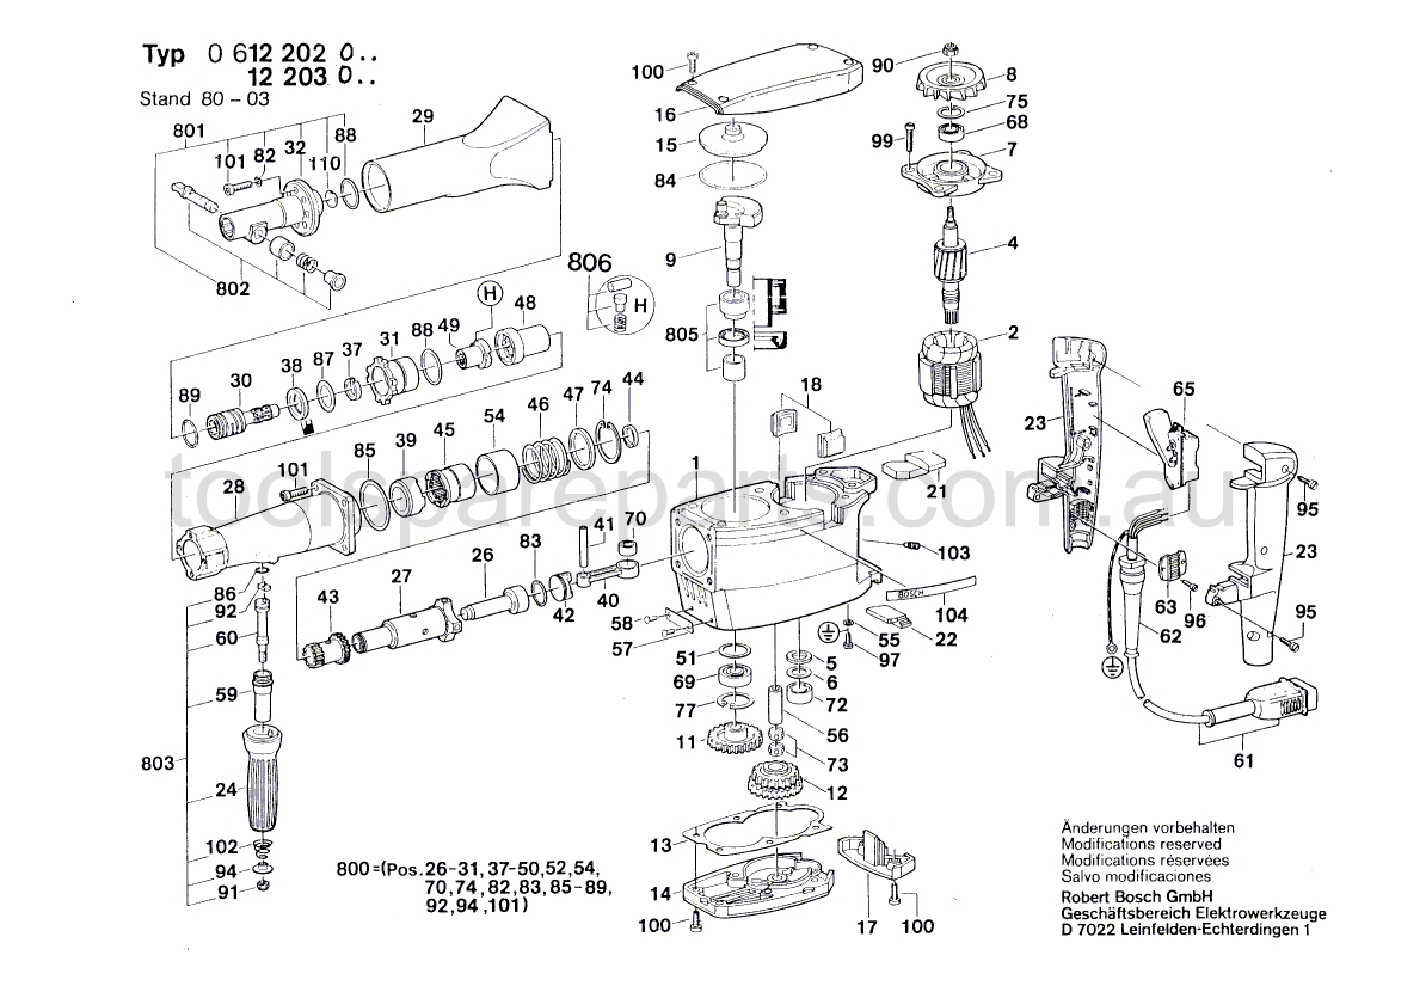 Bosch ---- 0612202022  Diagram 1